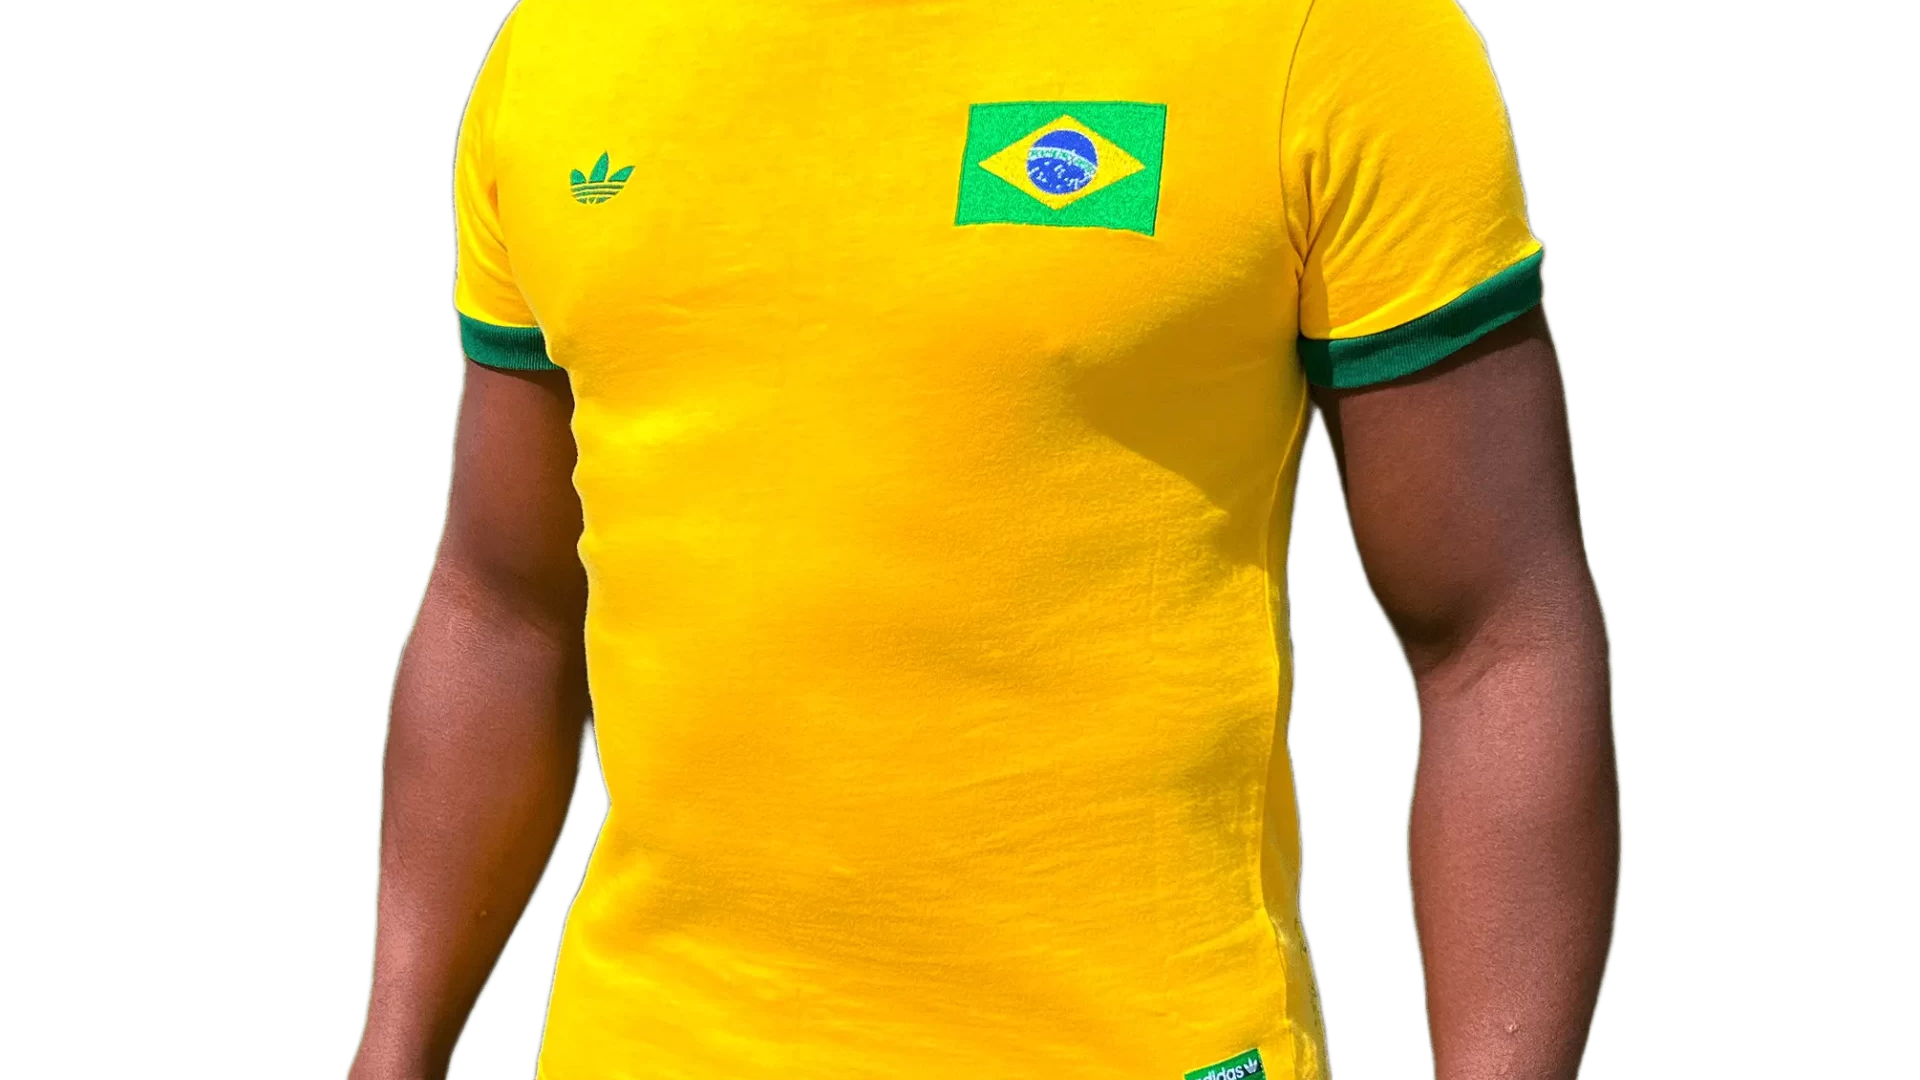 Men's 2006 Brasil '70 T-Shirt by Adidas Originals: Memorable (EnLawded.com file #lmchk67045ip2y123822kg9st)